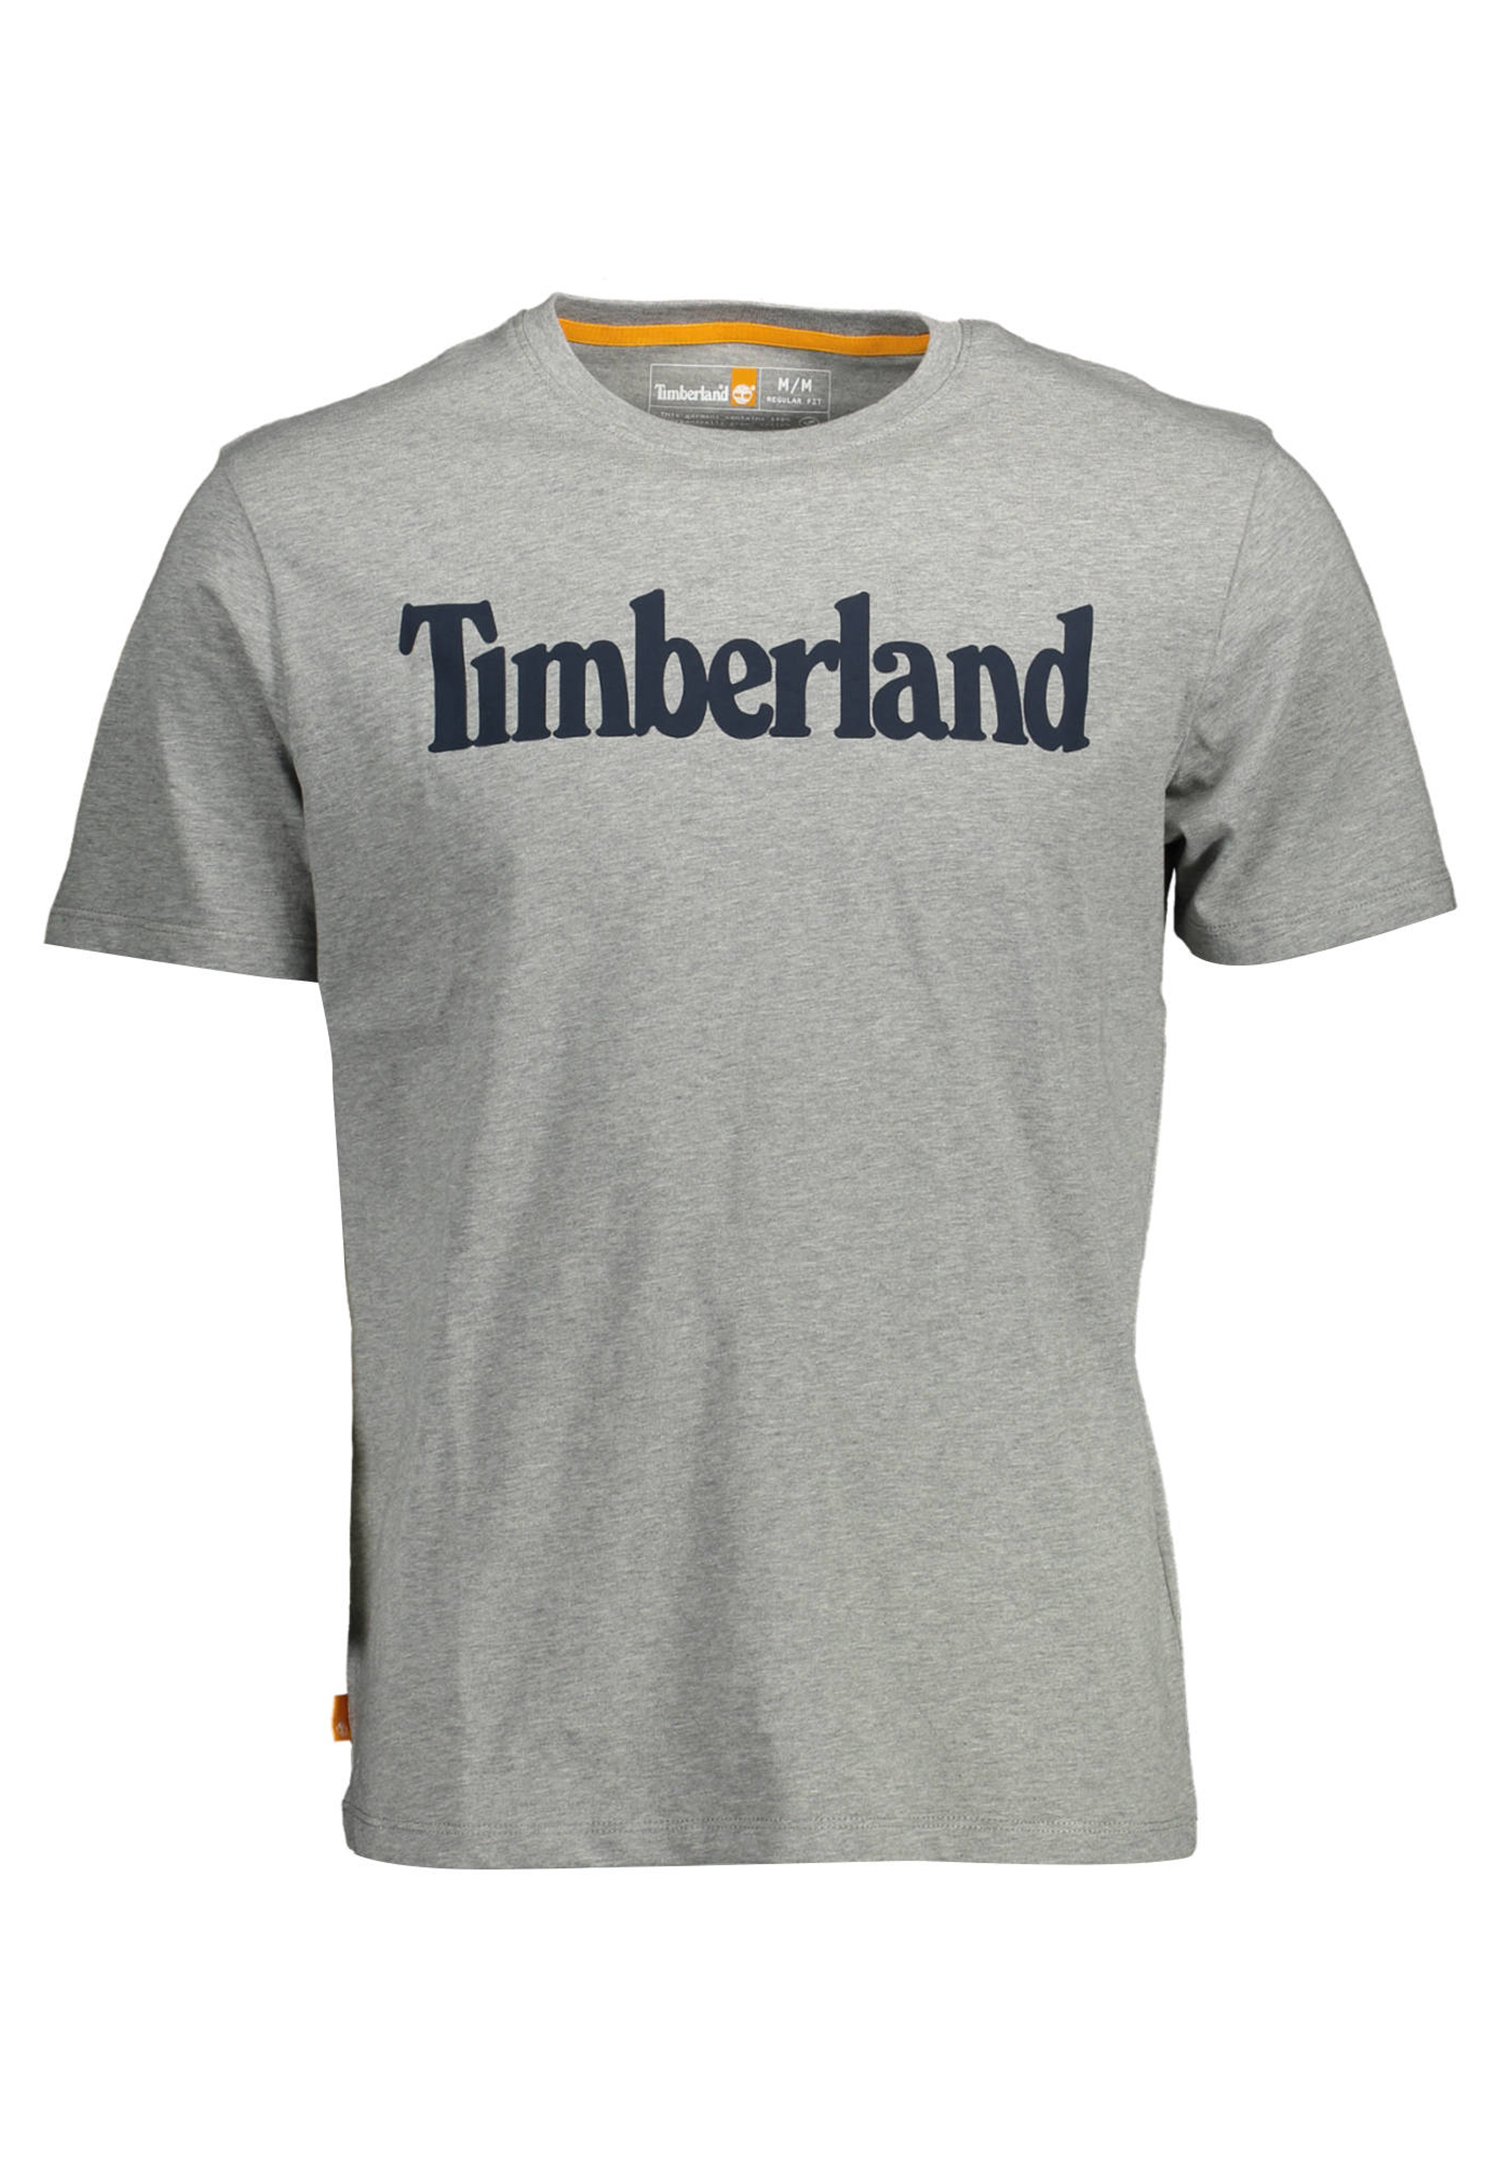 Timberland TFO SS Linear Tee Herren T-Shirt Shirt TB0A2BRN 052 grau